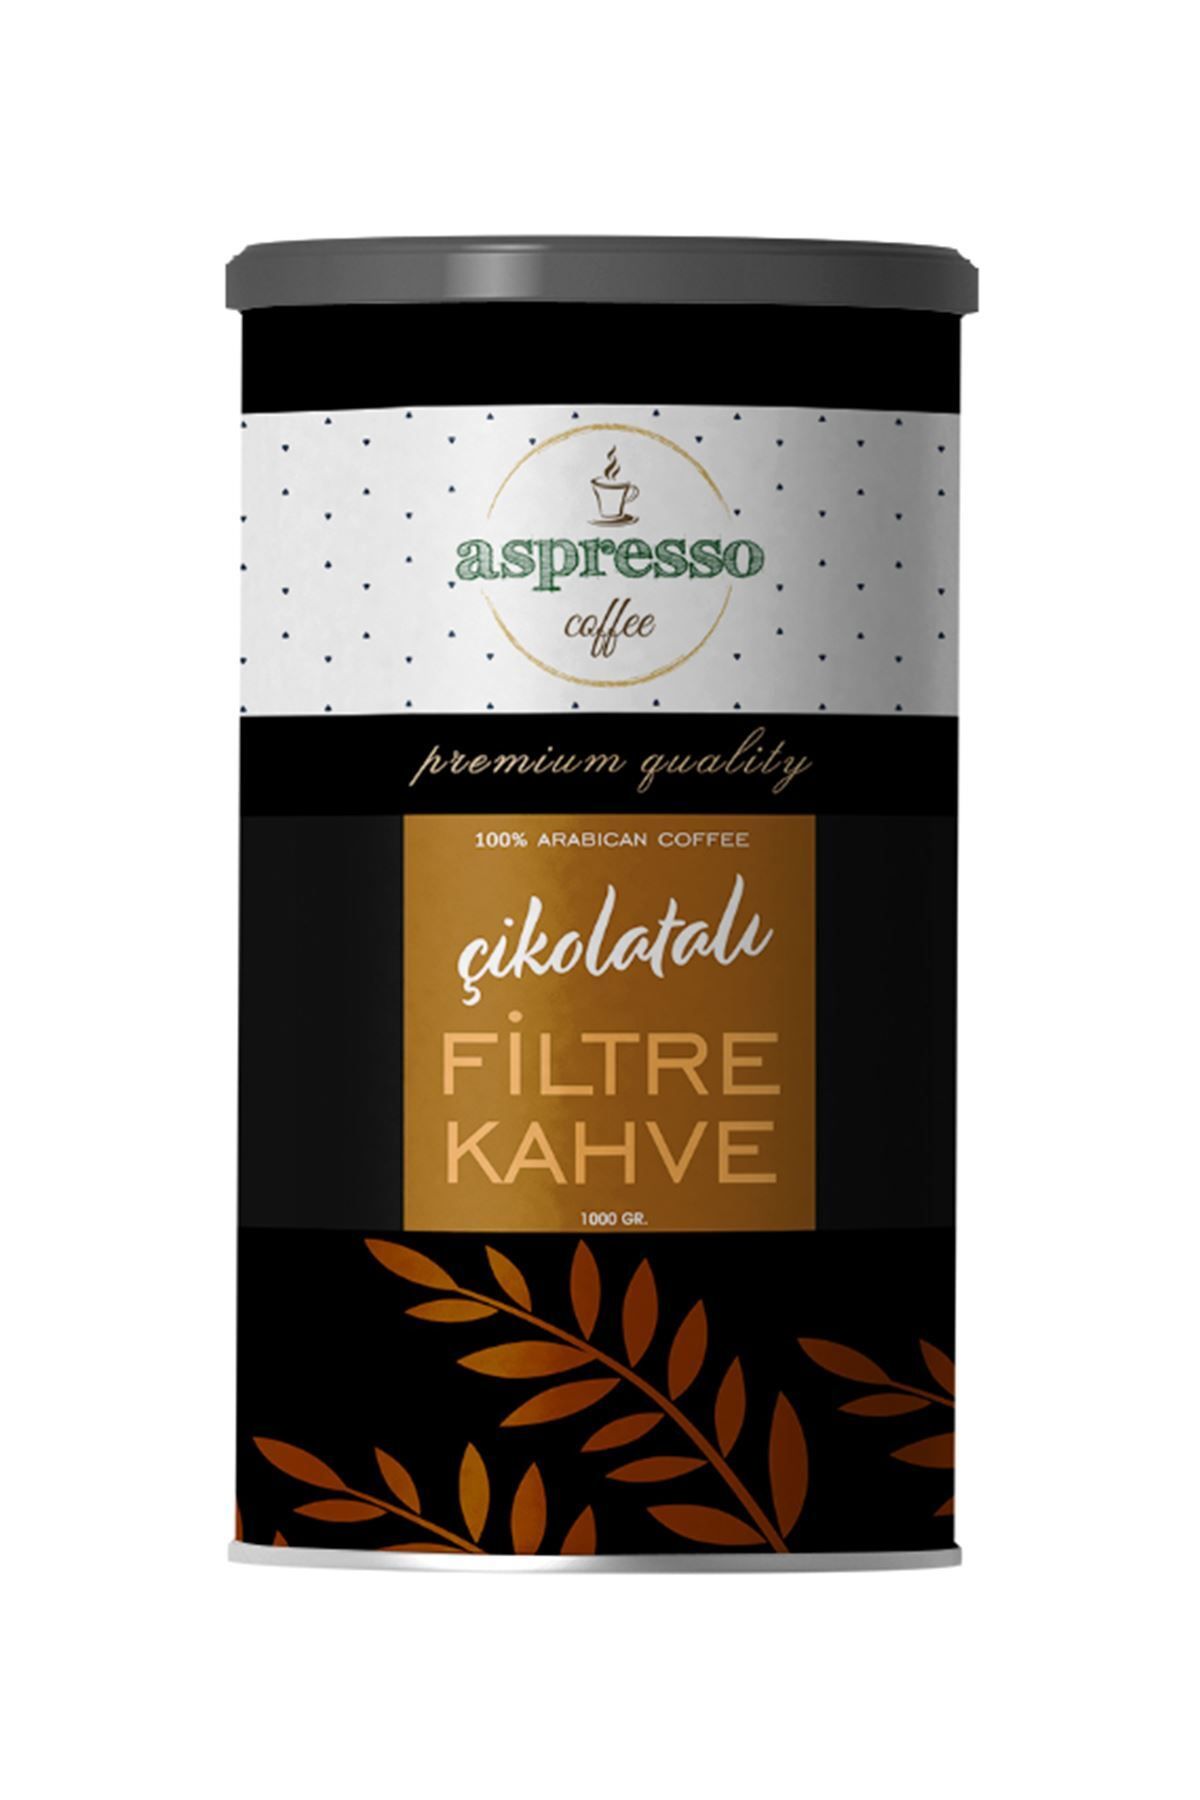 aspresso Çikolatalı Filtre Kahve 500 Gr.